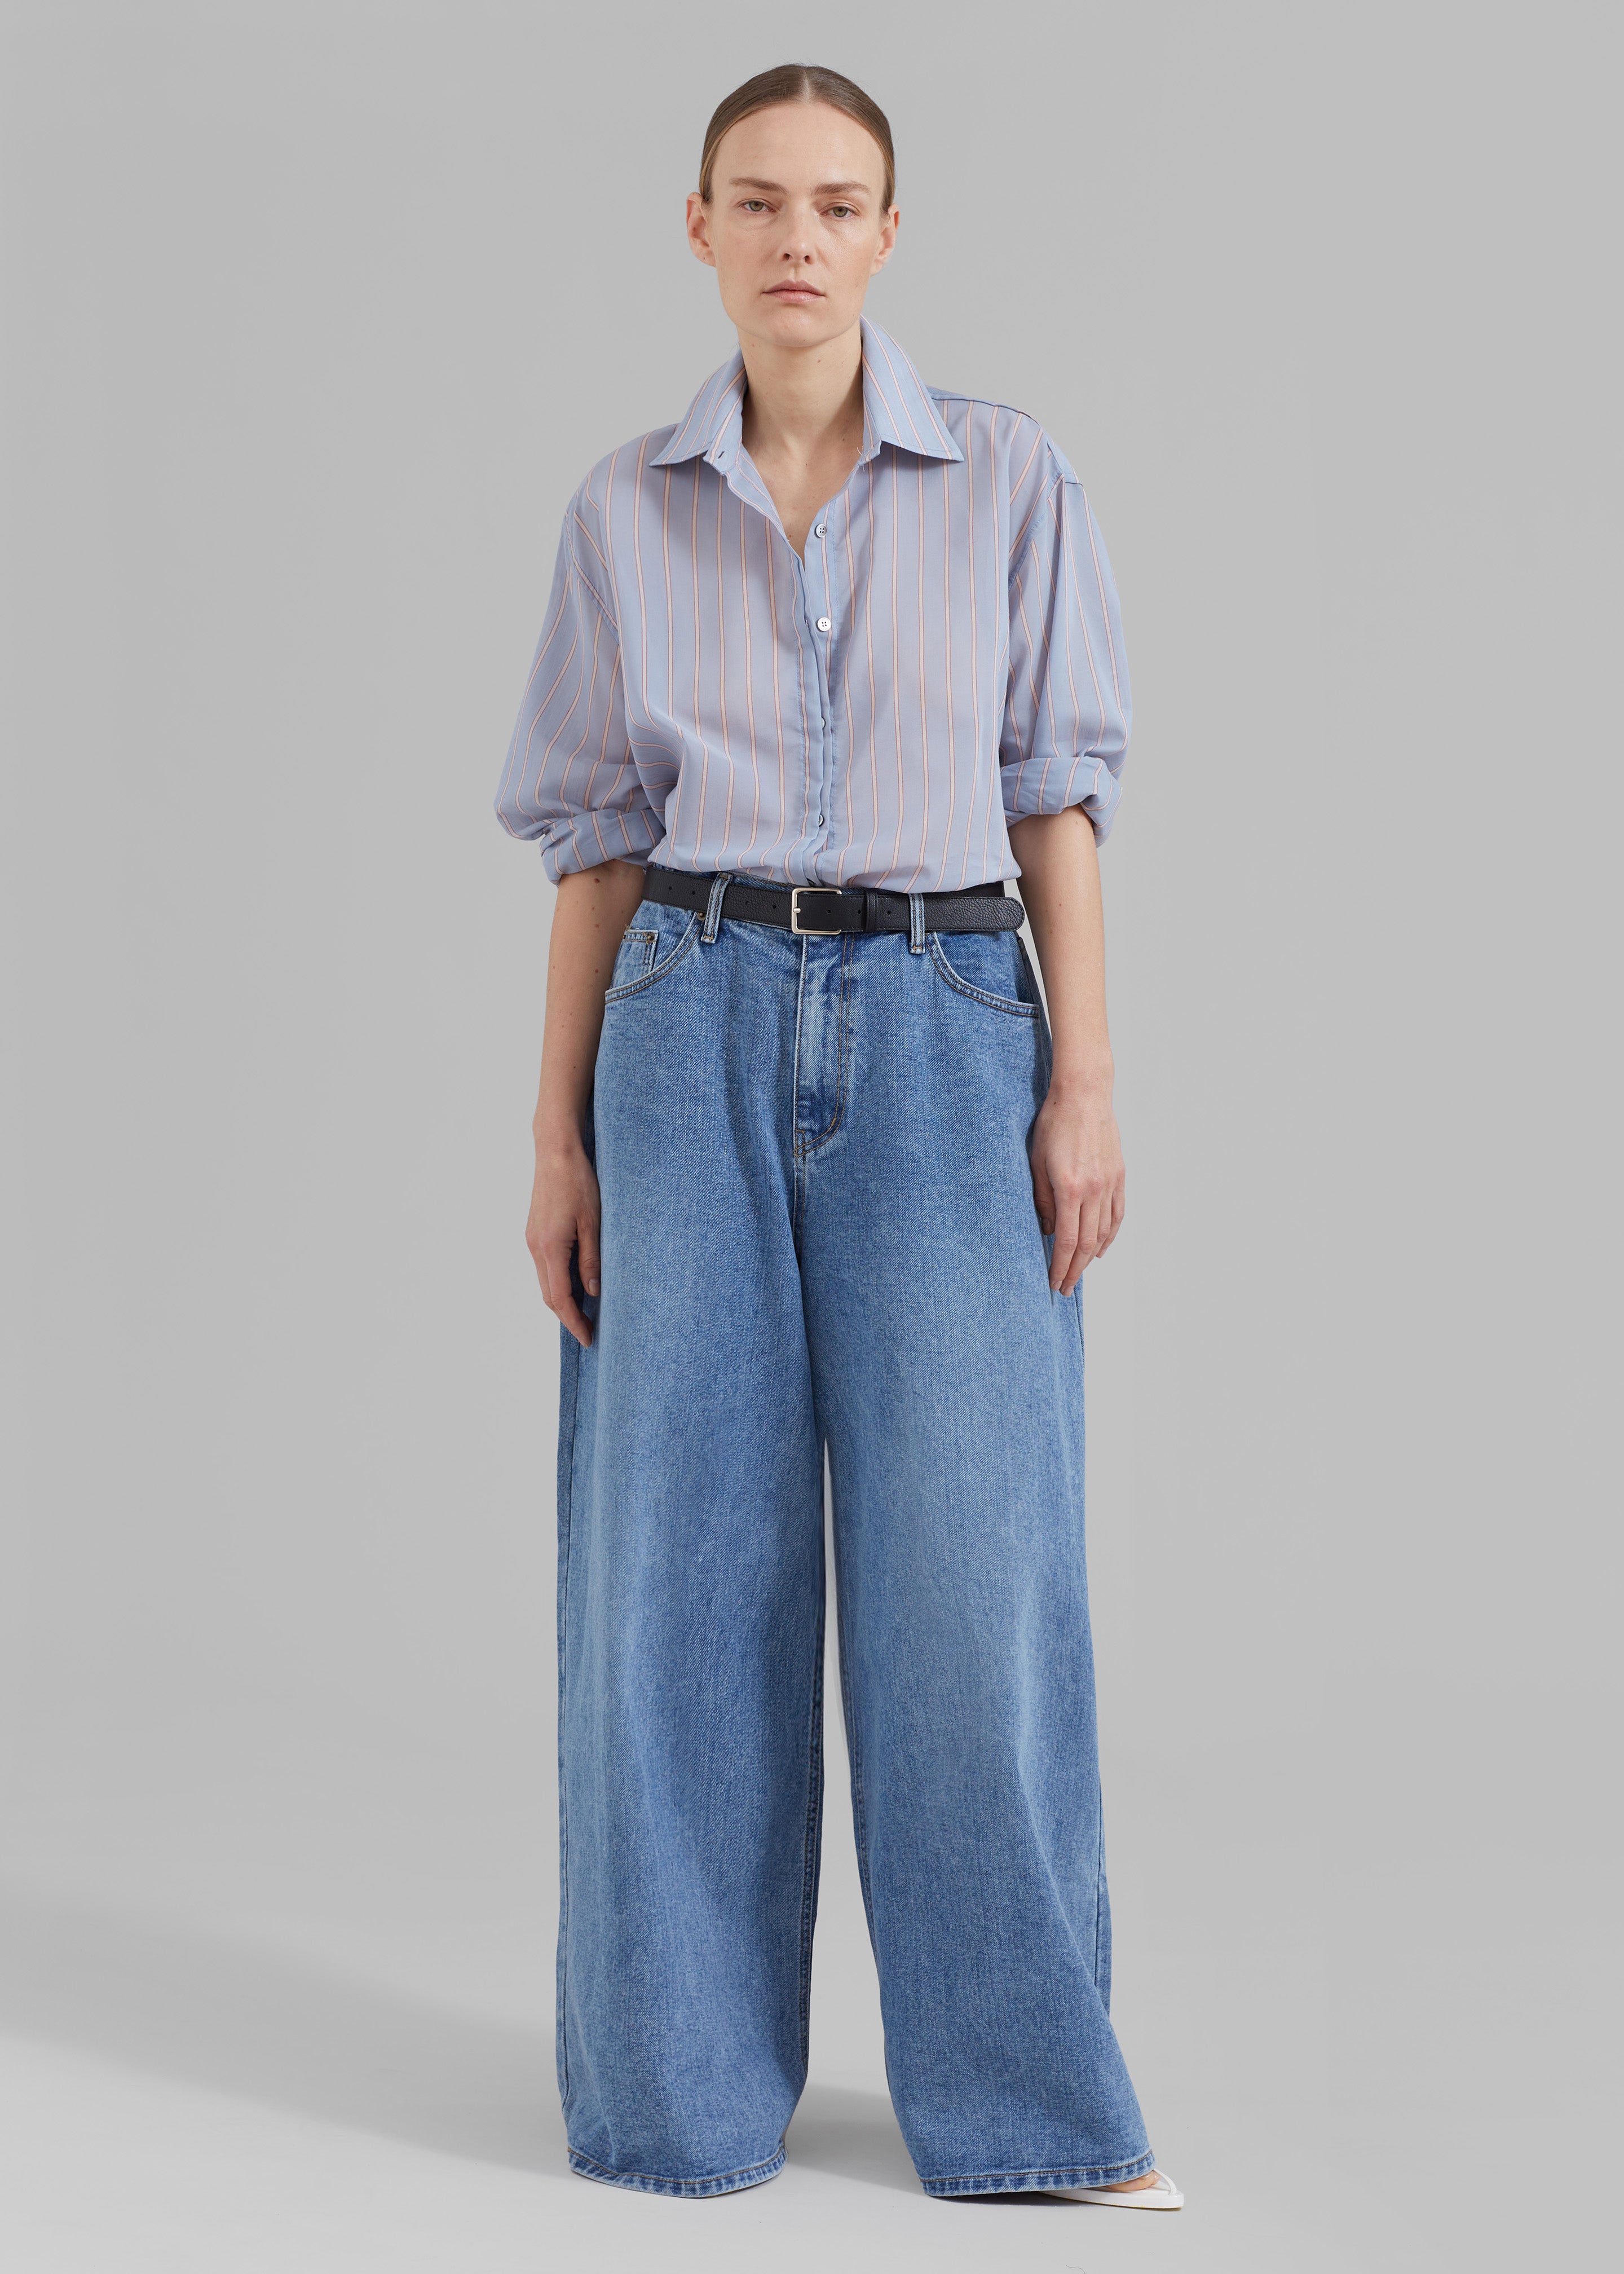 Florence Stripe Shirt - Blue Combo - 6